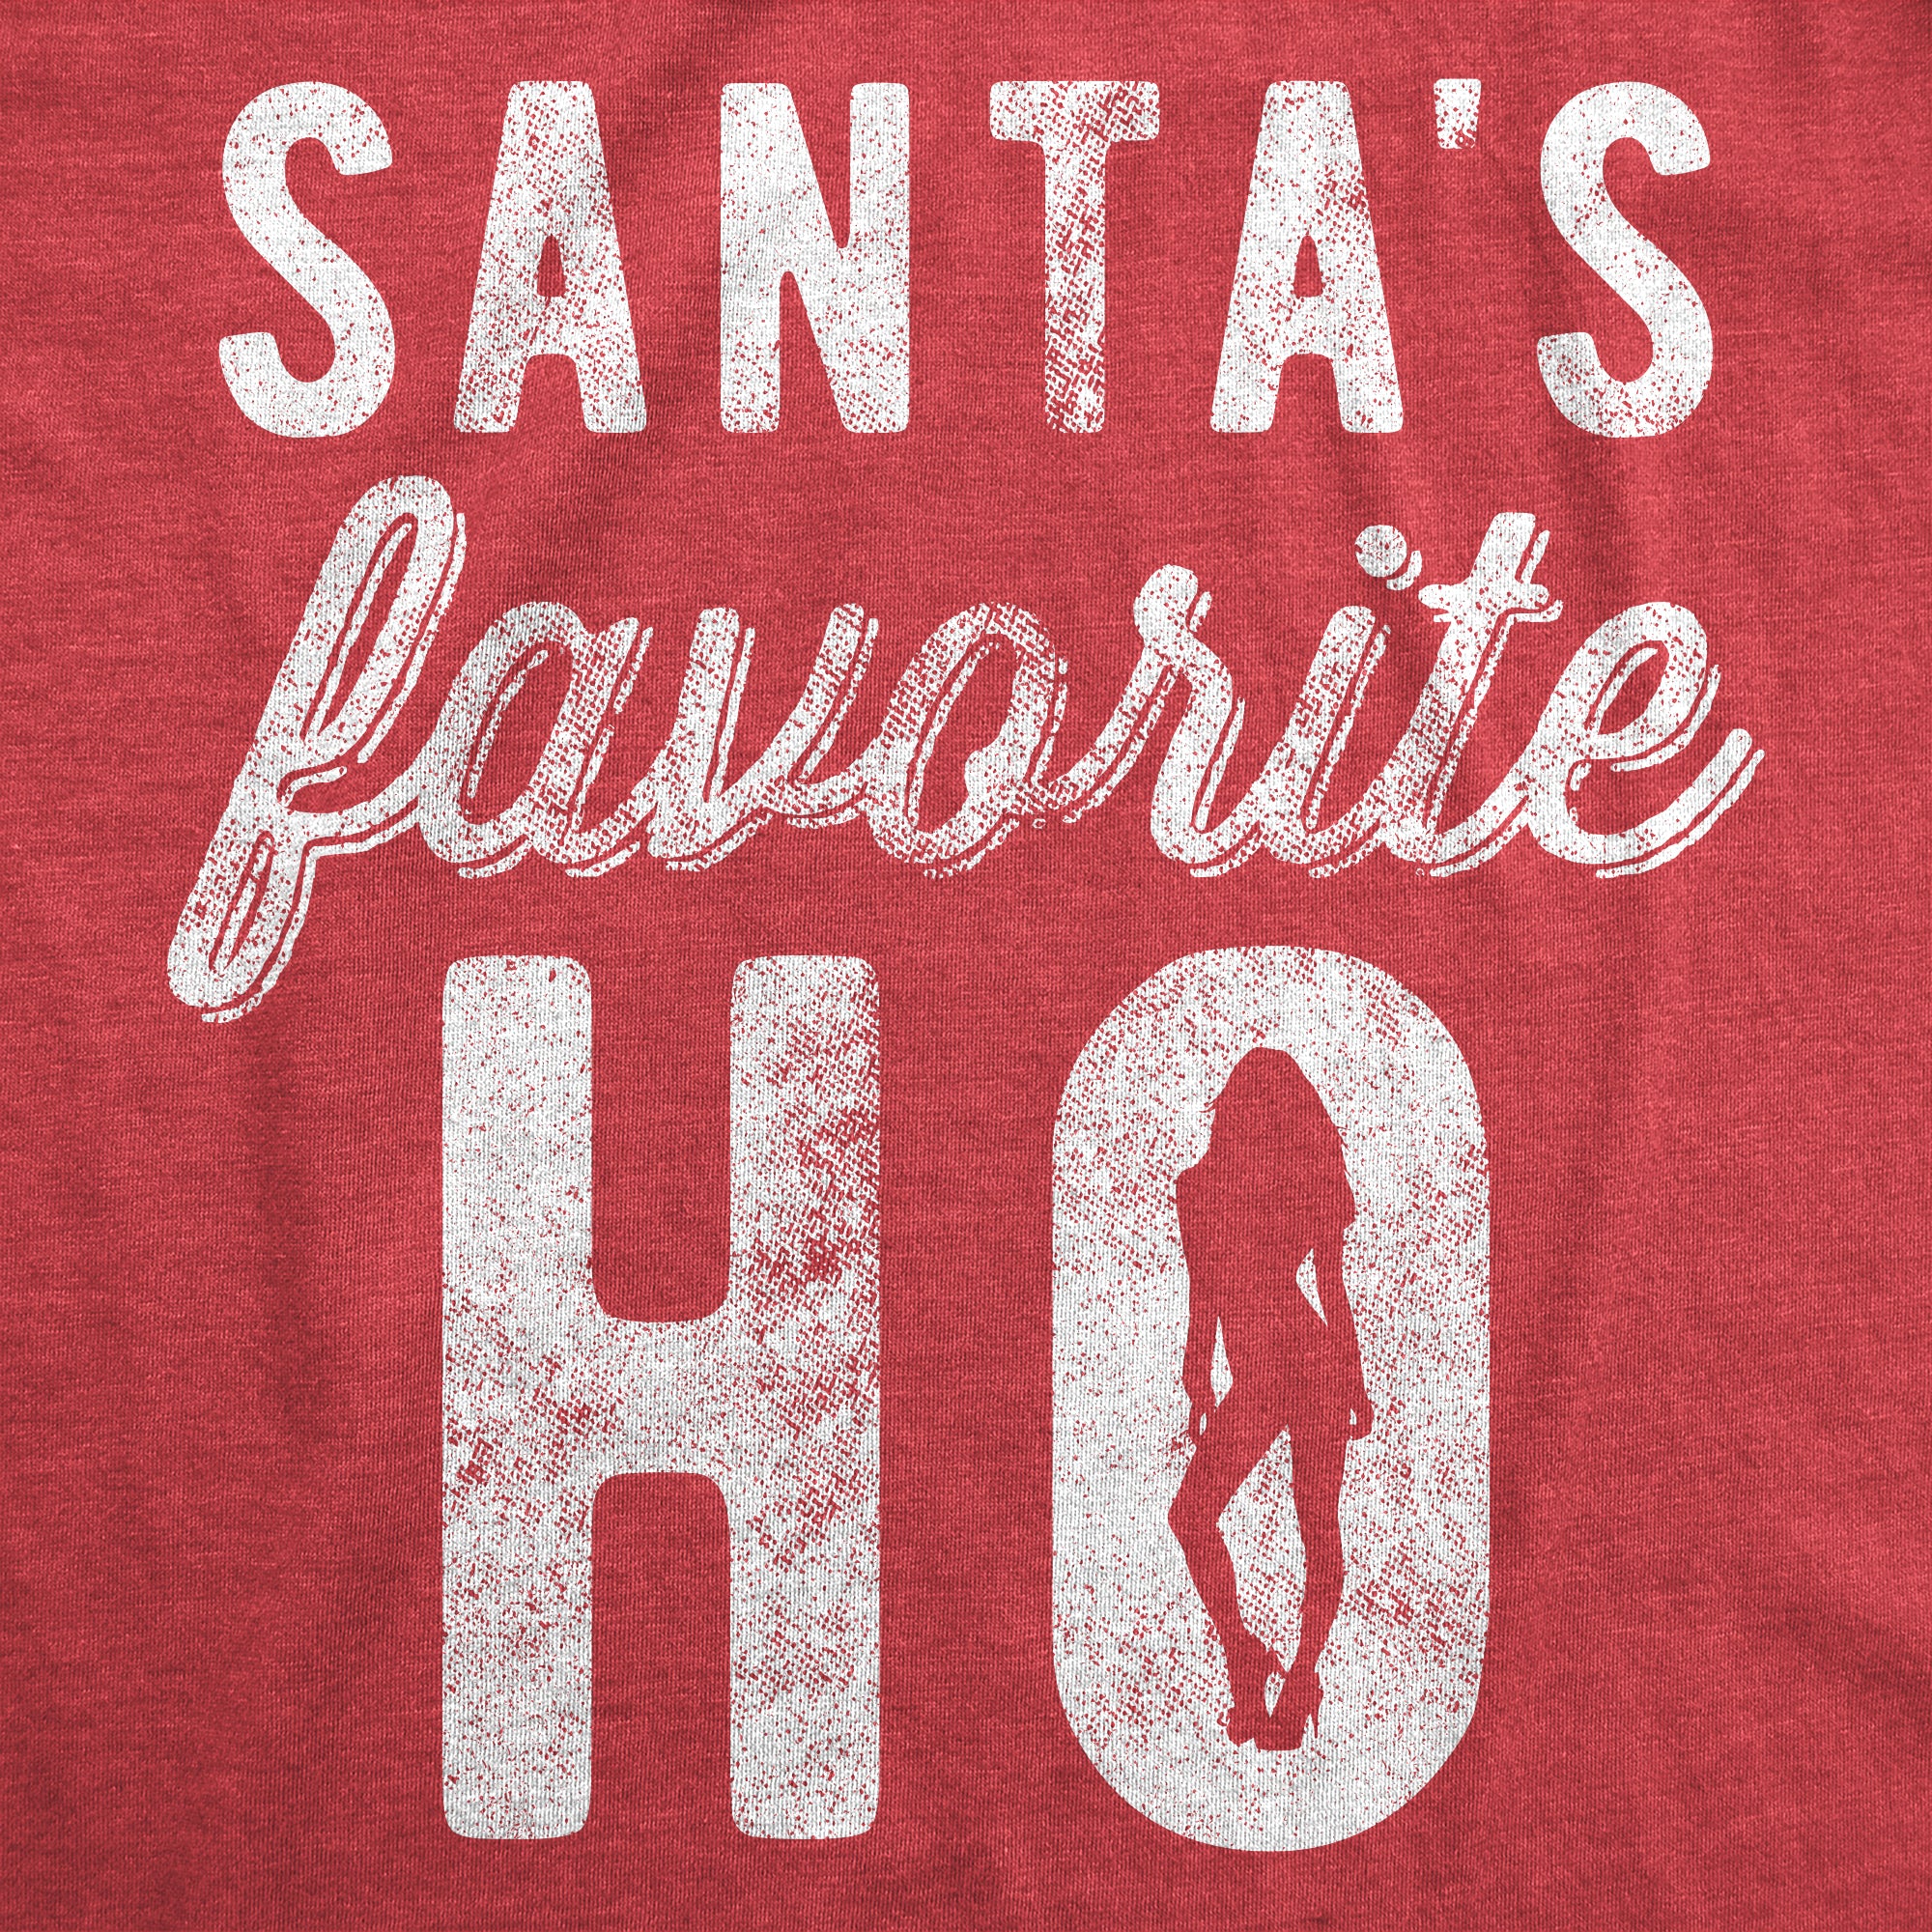 Funny Heather Red - Favorite Ho Santa's Favorite Ho Mens T Shirt Nerdy Christmas Sex Tee